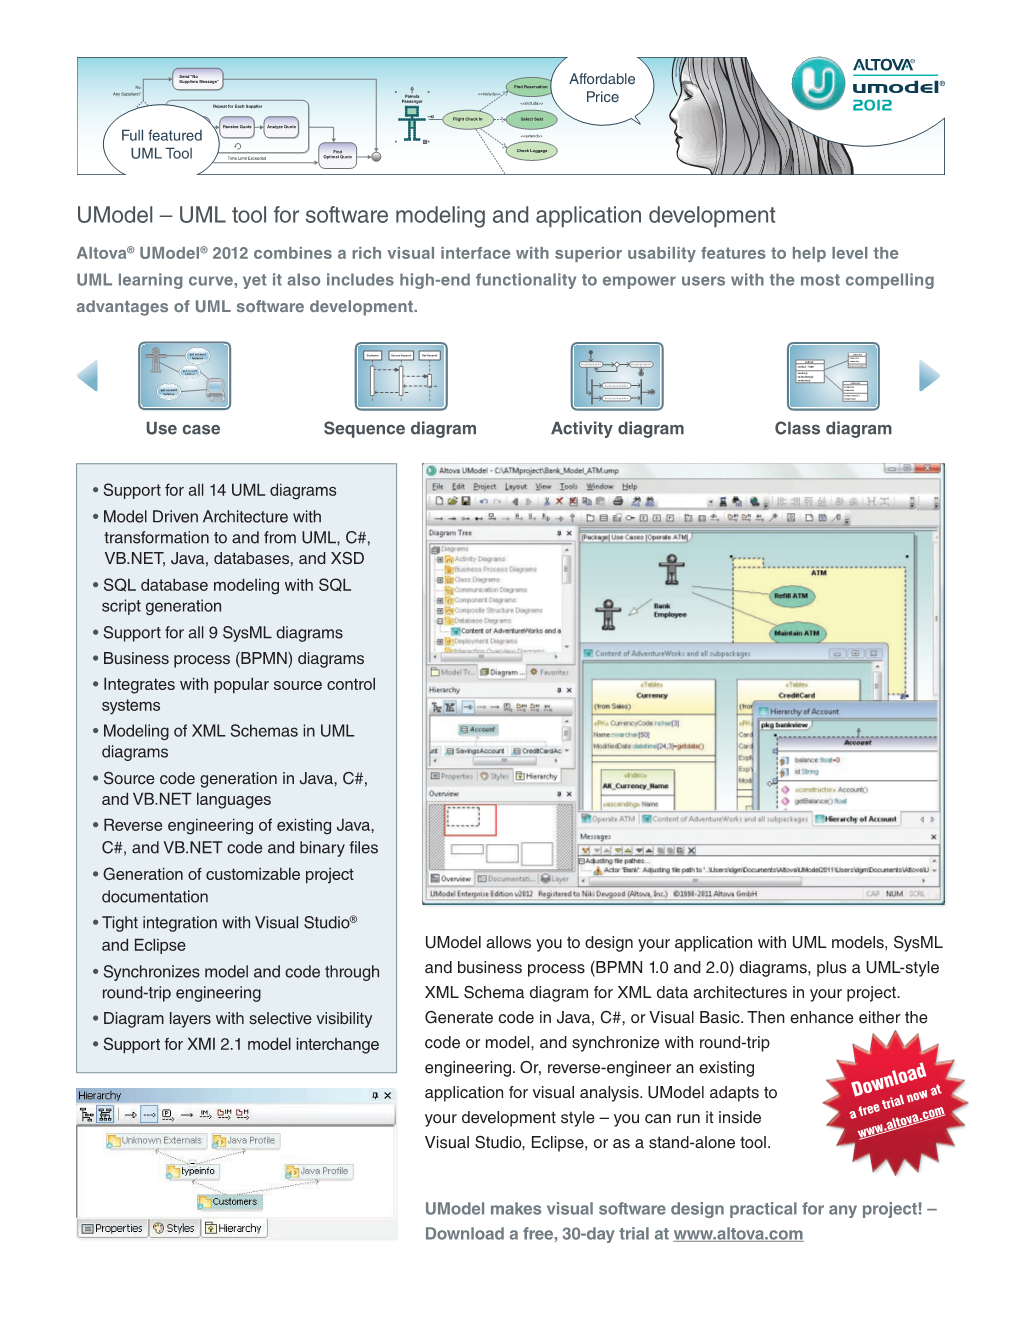 Umodel – UML Tool for Software Modeling and Application Development